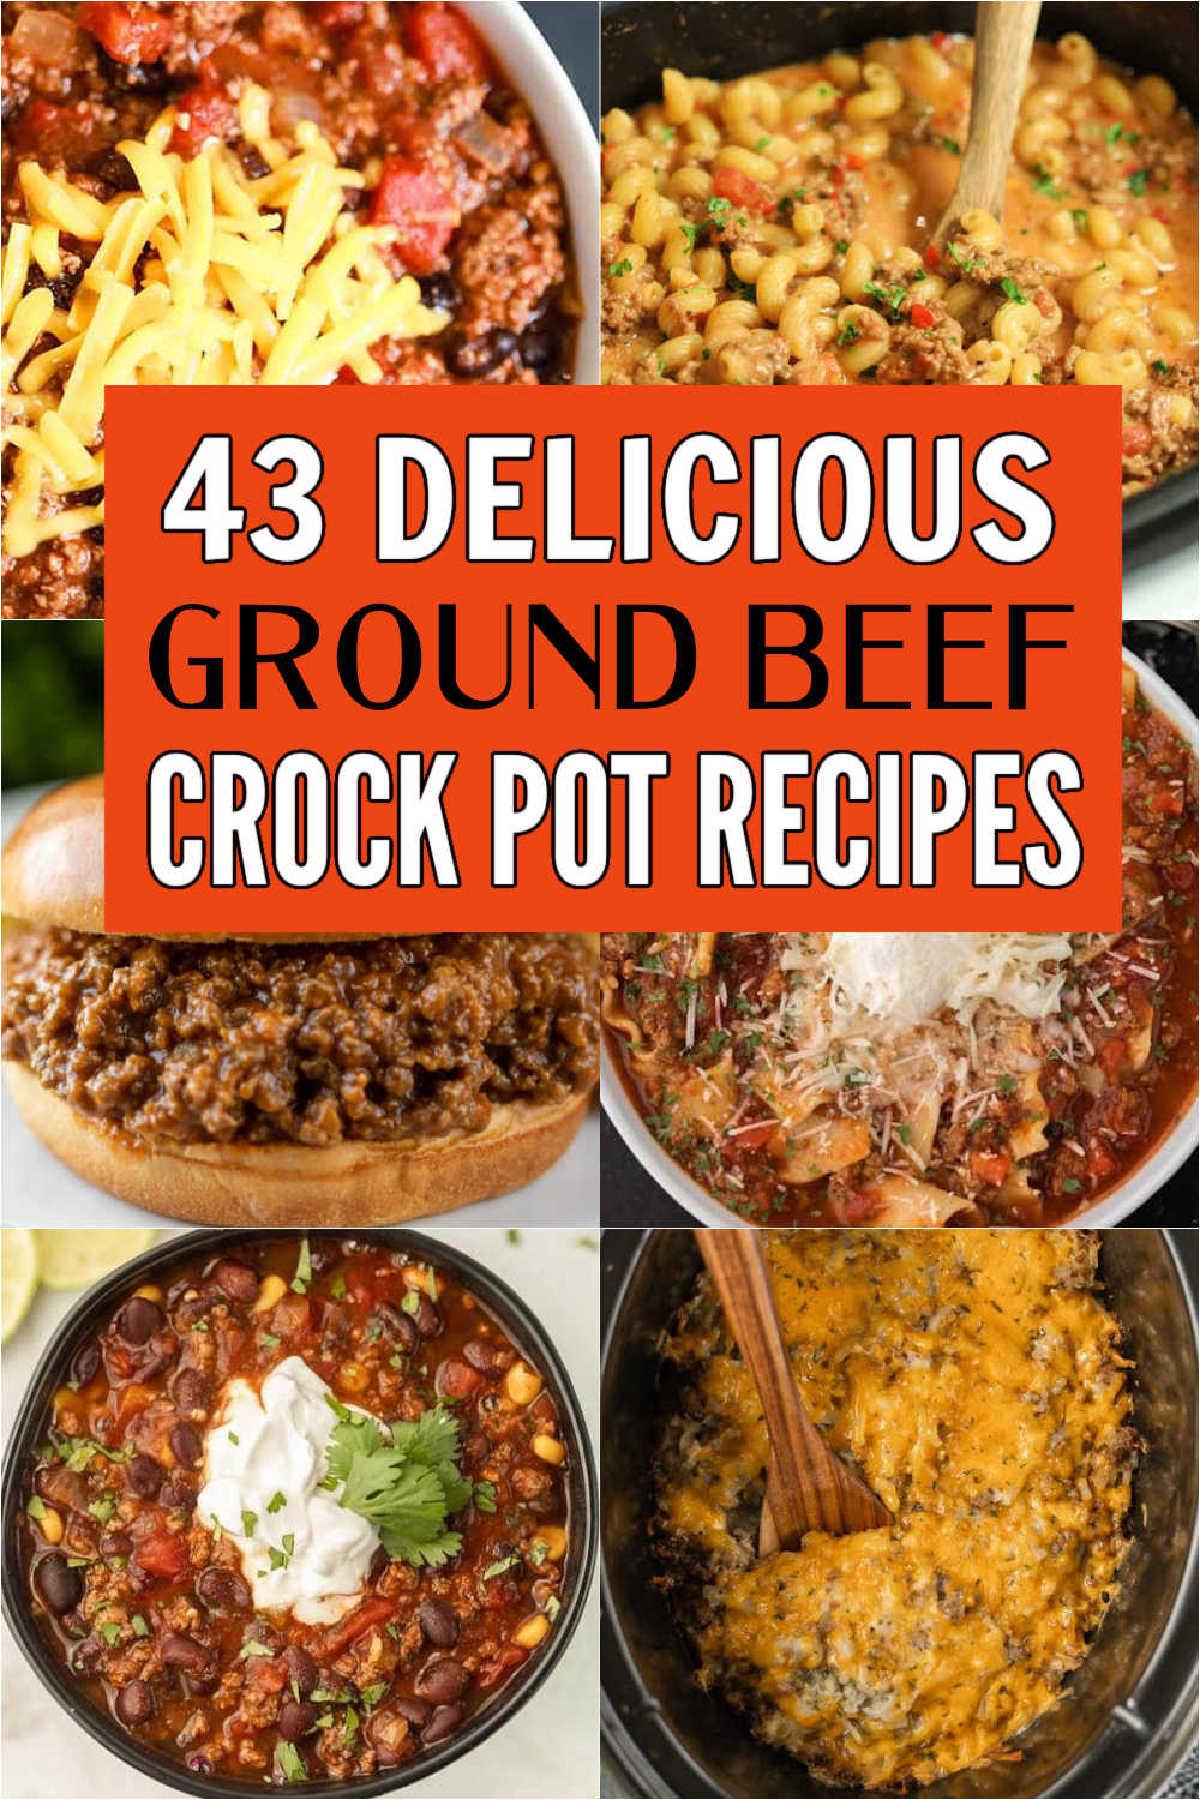 28 Easy Crockpot Dinner Ideas (on a budget) - Making Frugal FUN